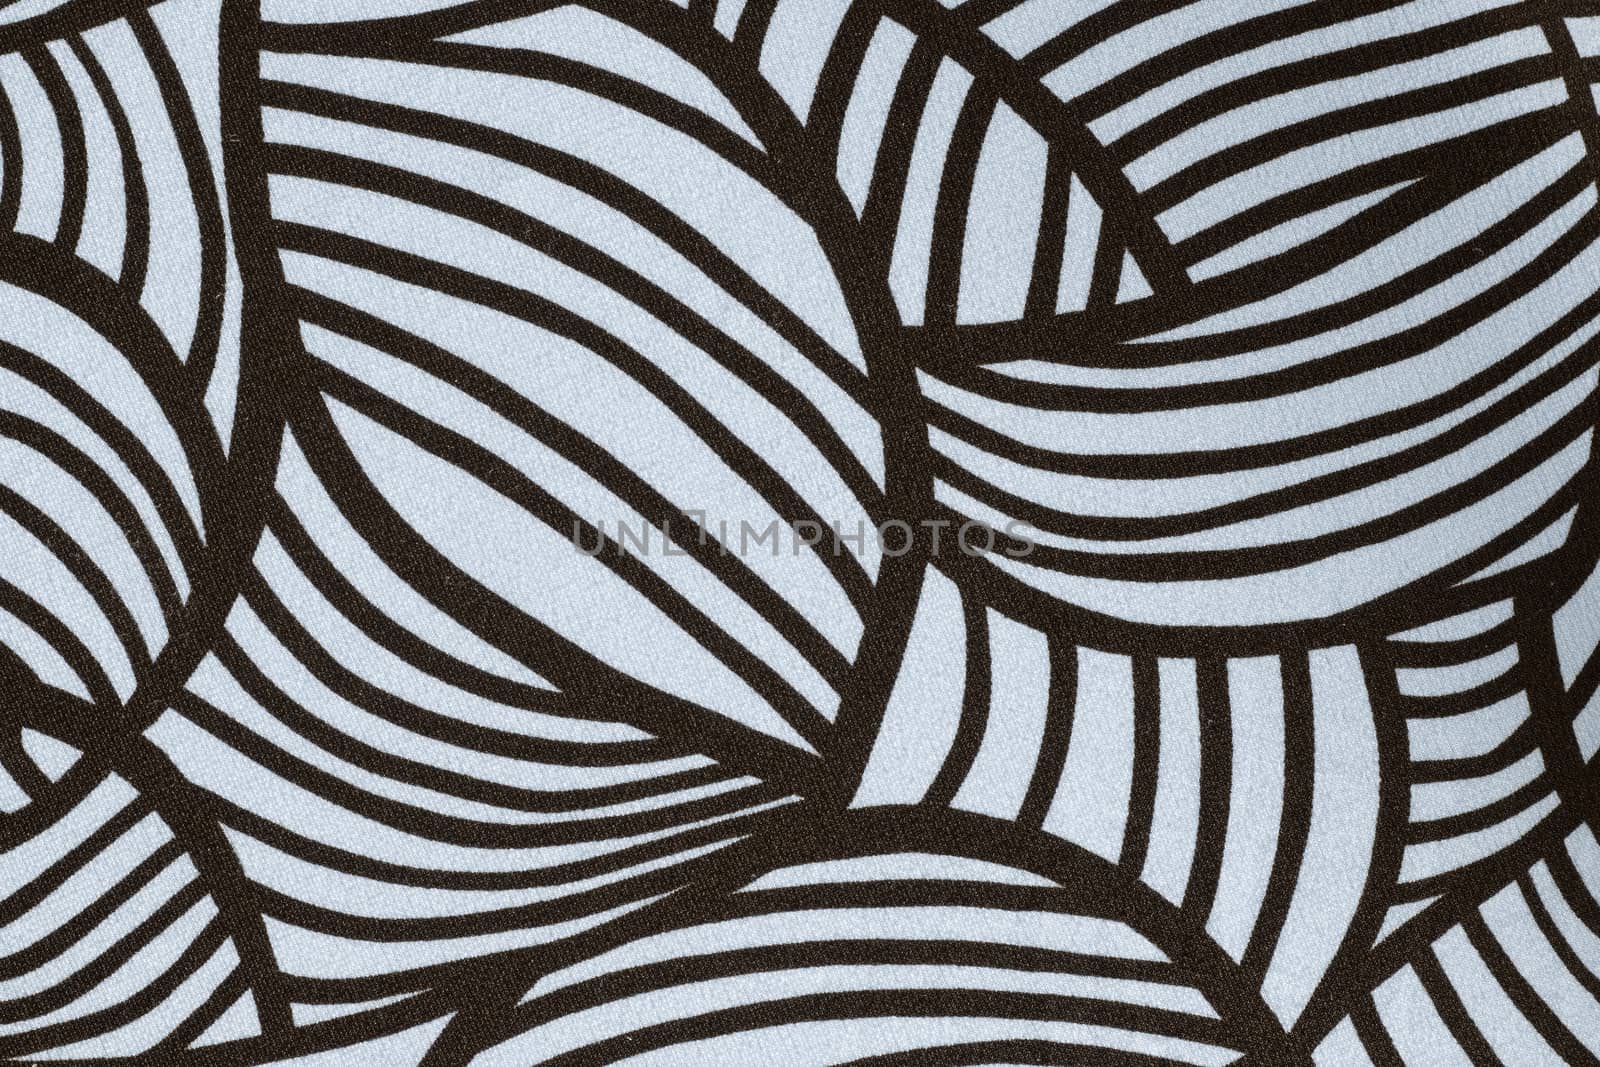 cloth. black and white color bohemian style, Boho, vintage, retro texture background